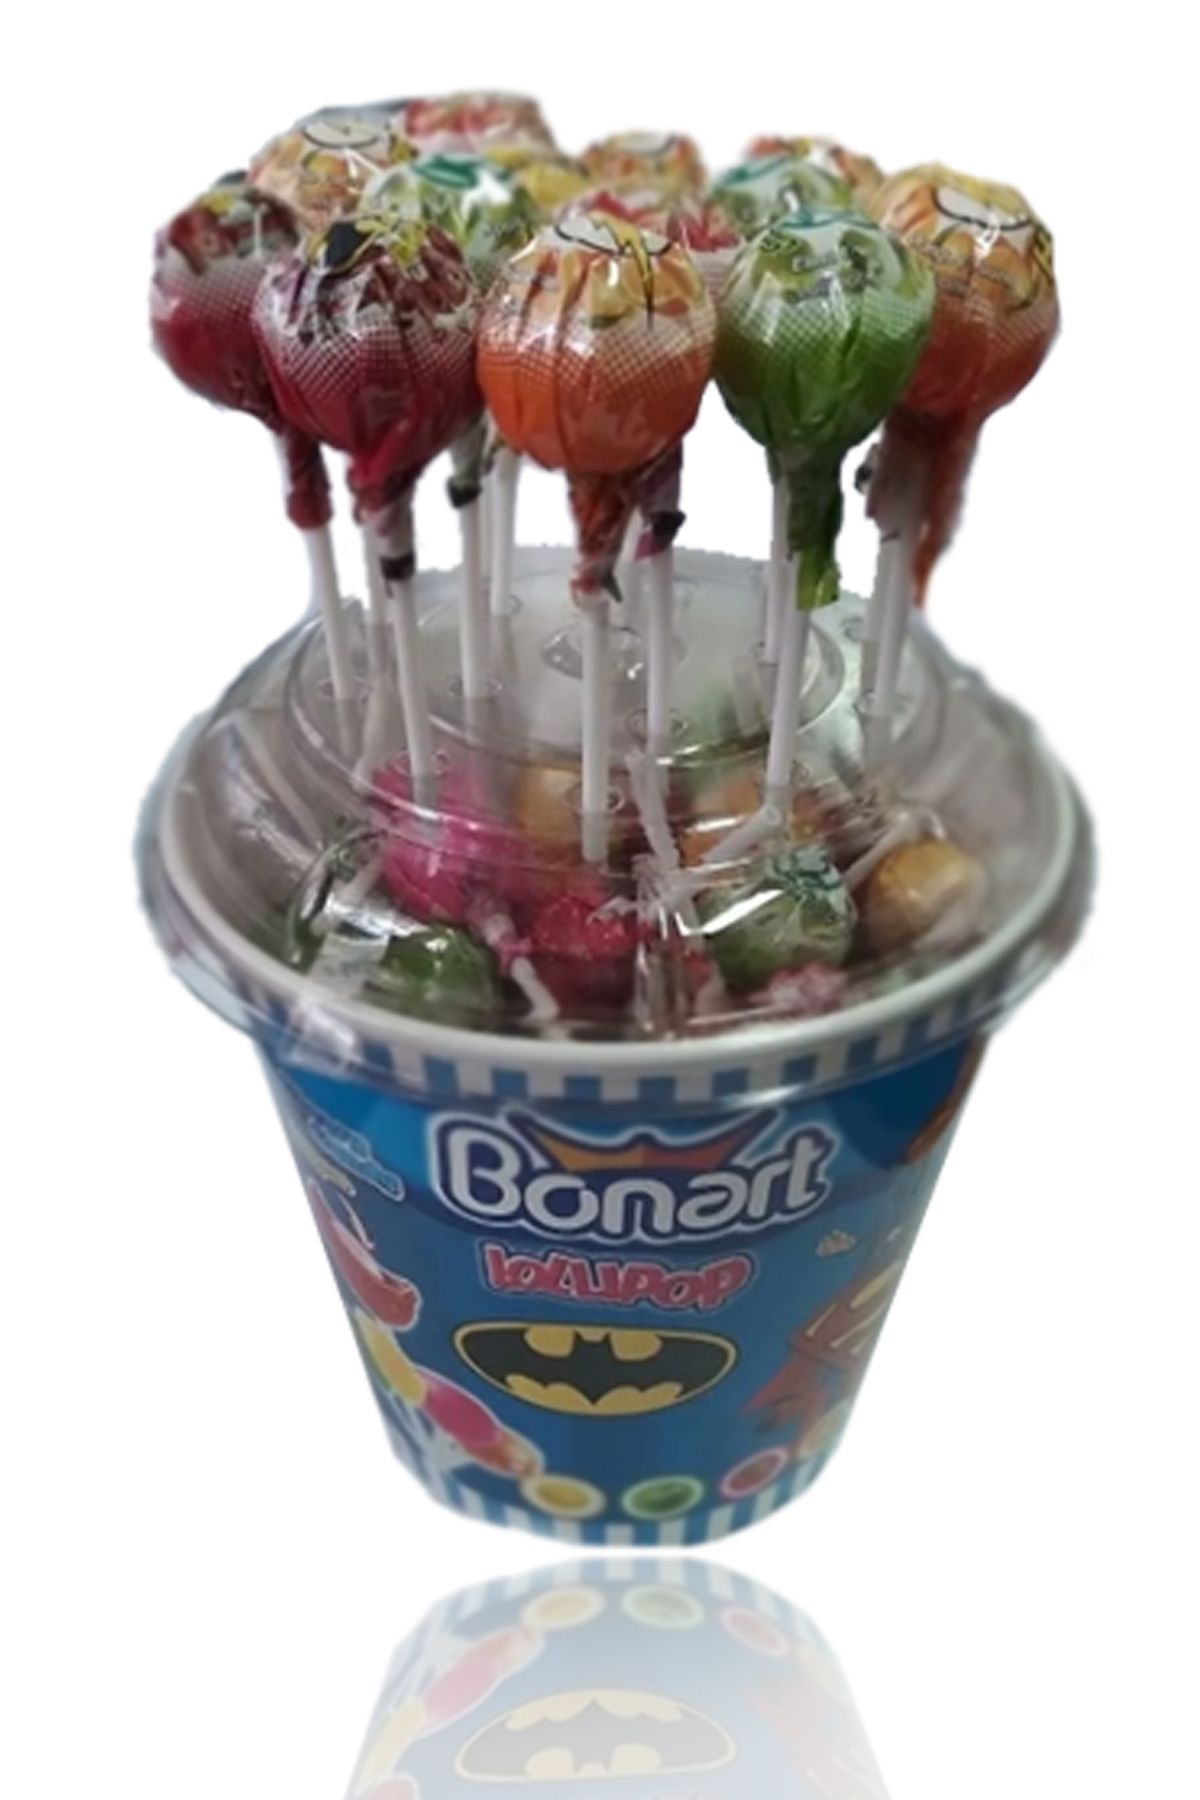 Bonart Süper Kahraman 16 gr 85 Adet Lollipop Şeker